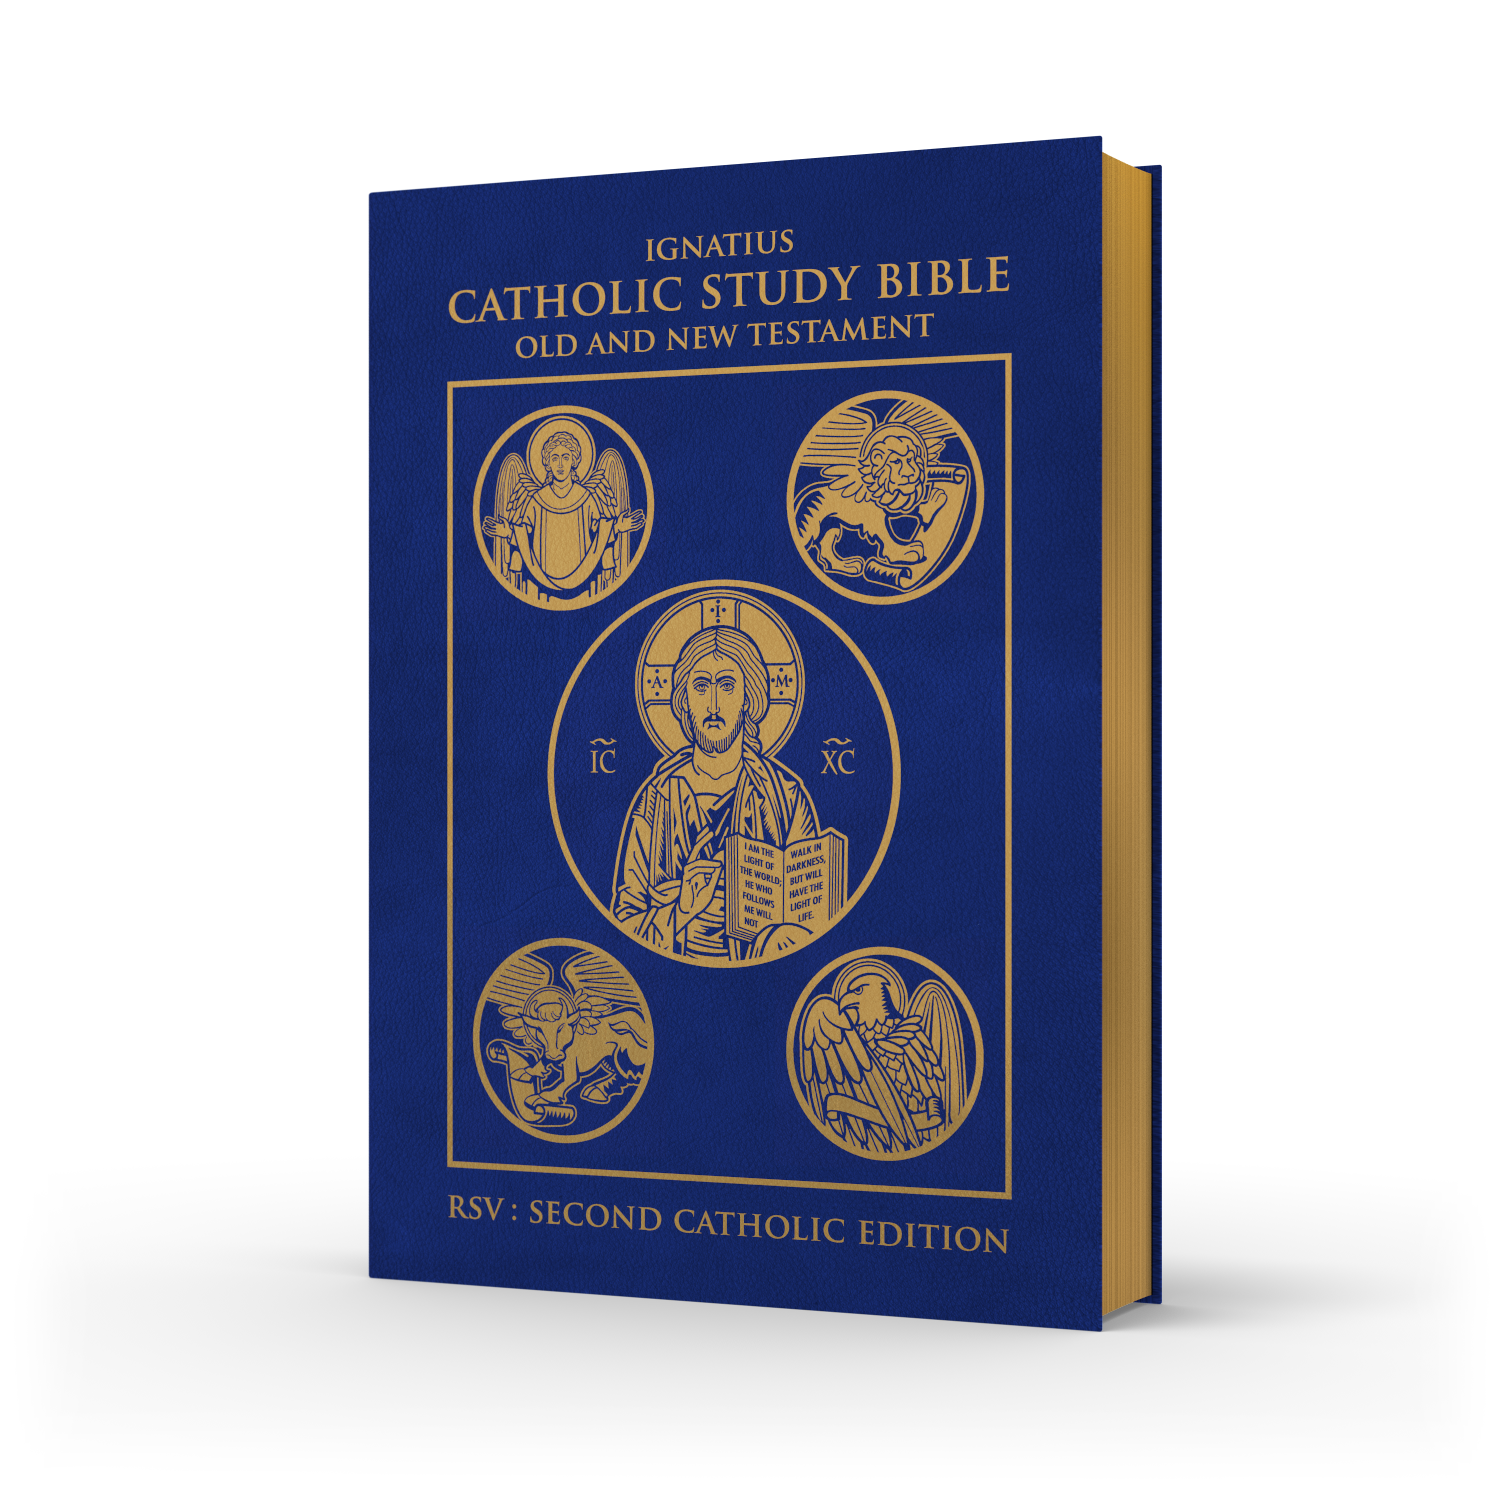 Ignatius Catholic Study Bible - Old and New Testament